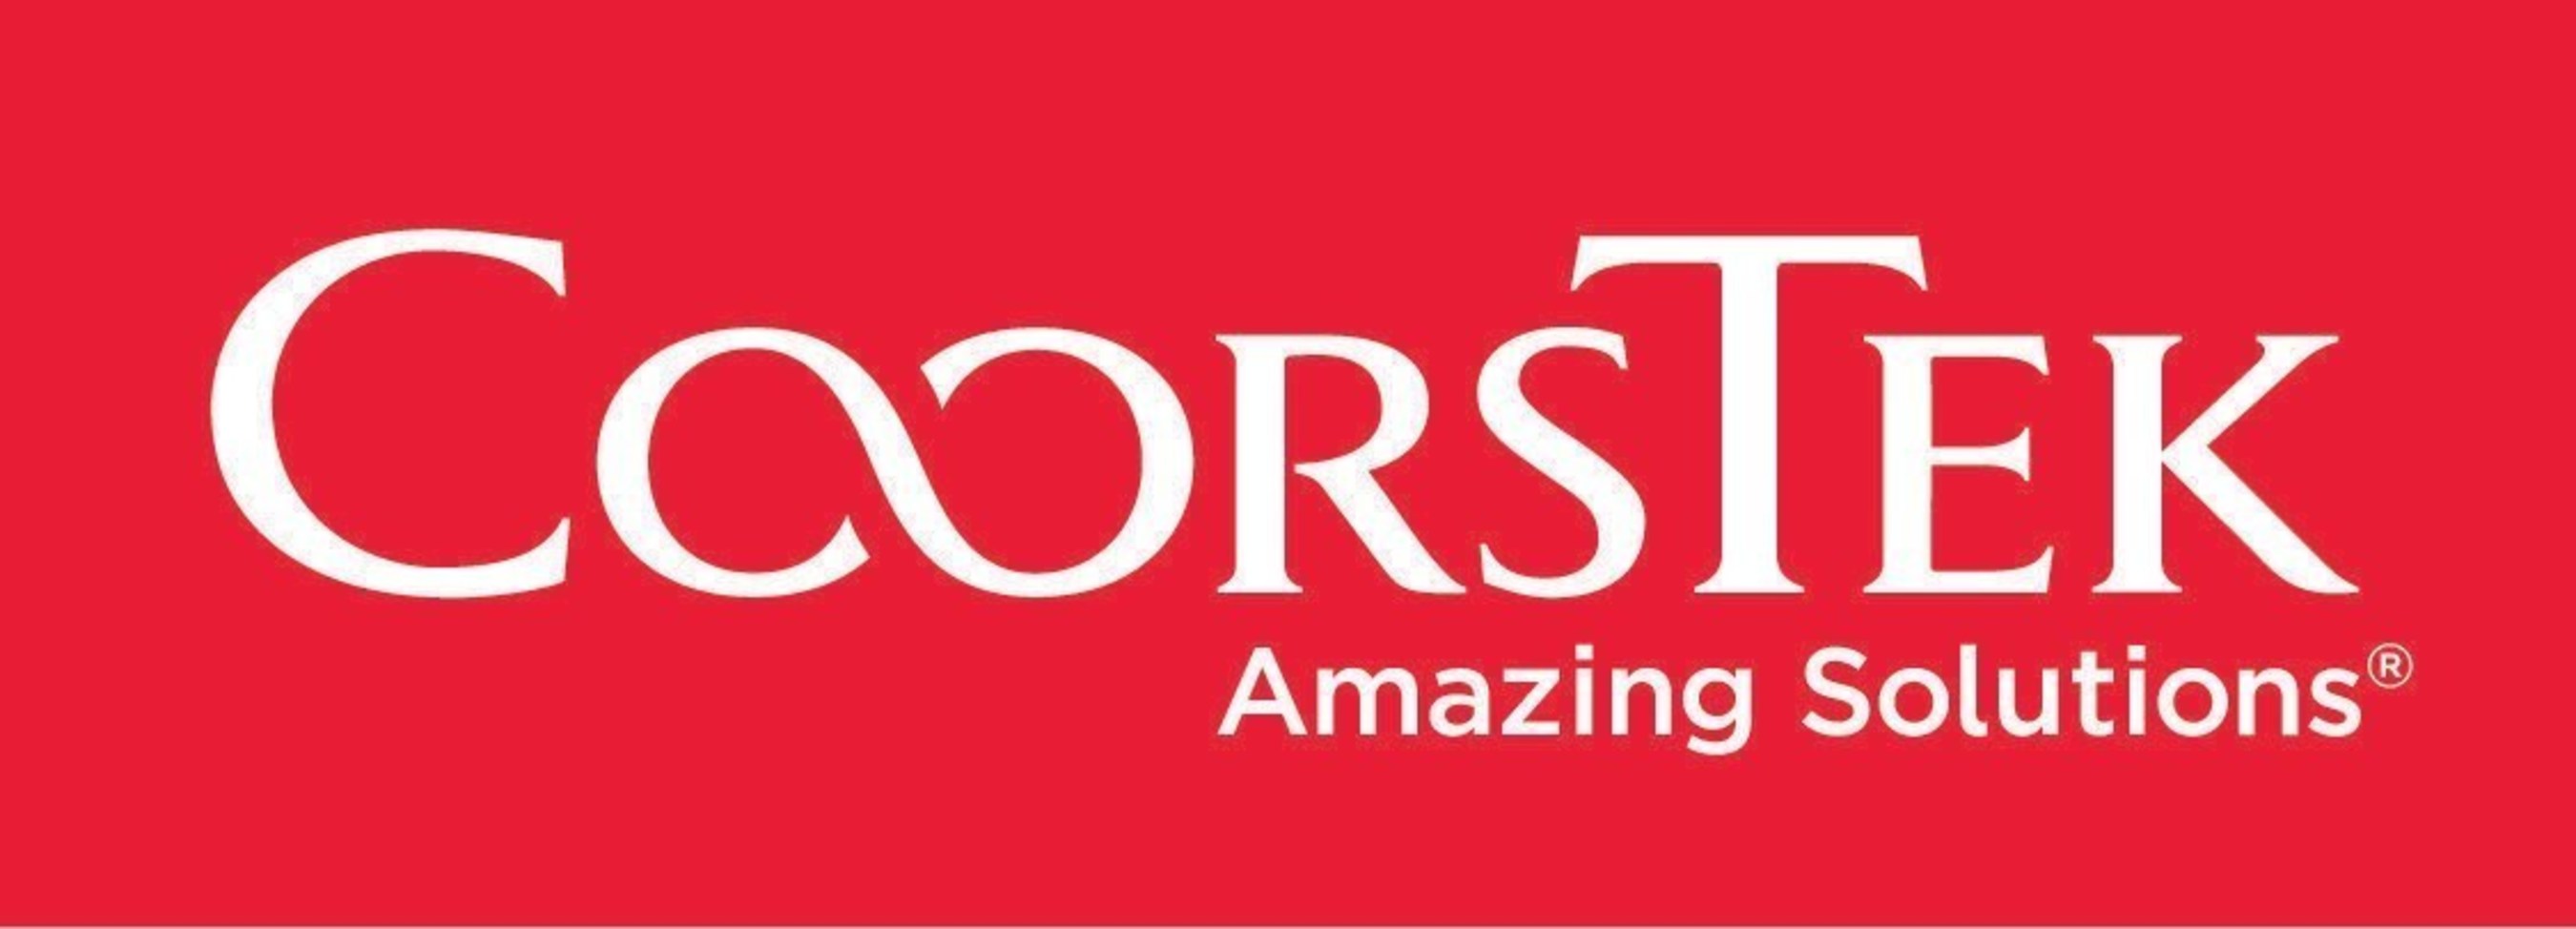 CoorsTek logo (PRNewsFoto/CoorsTek)